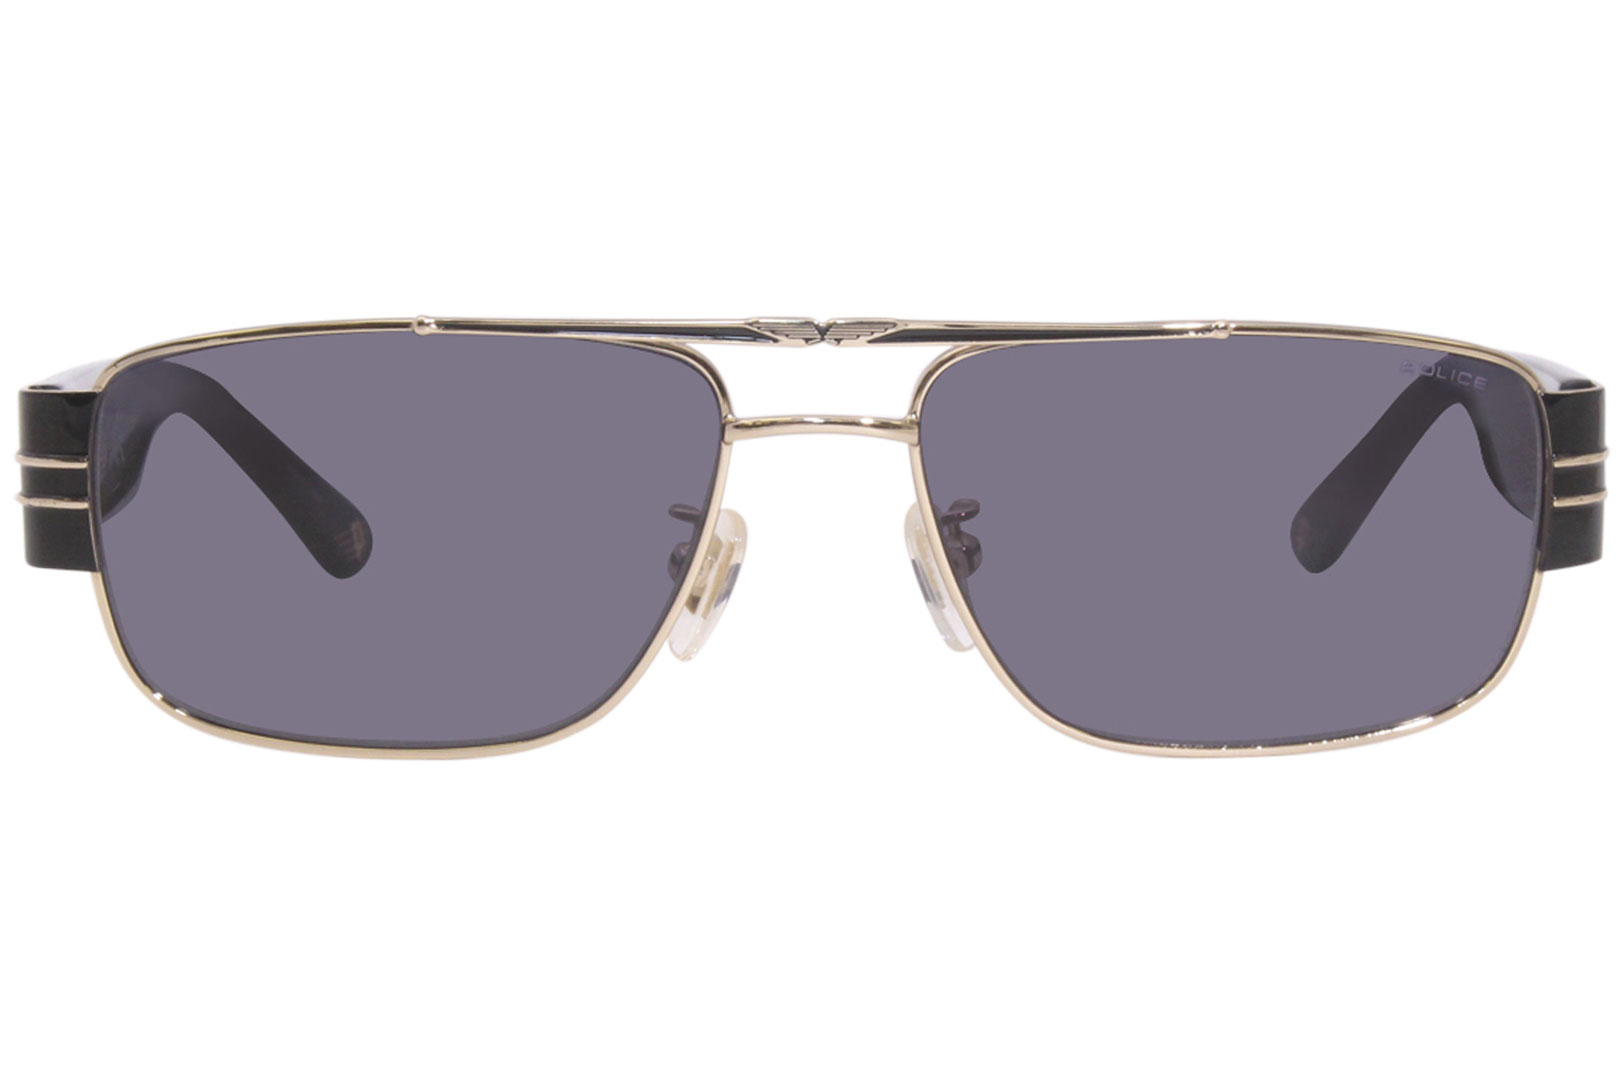 Police Gold Square Sunglasses for Men